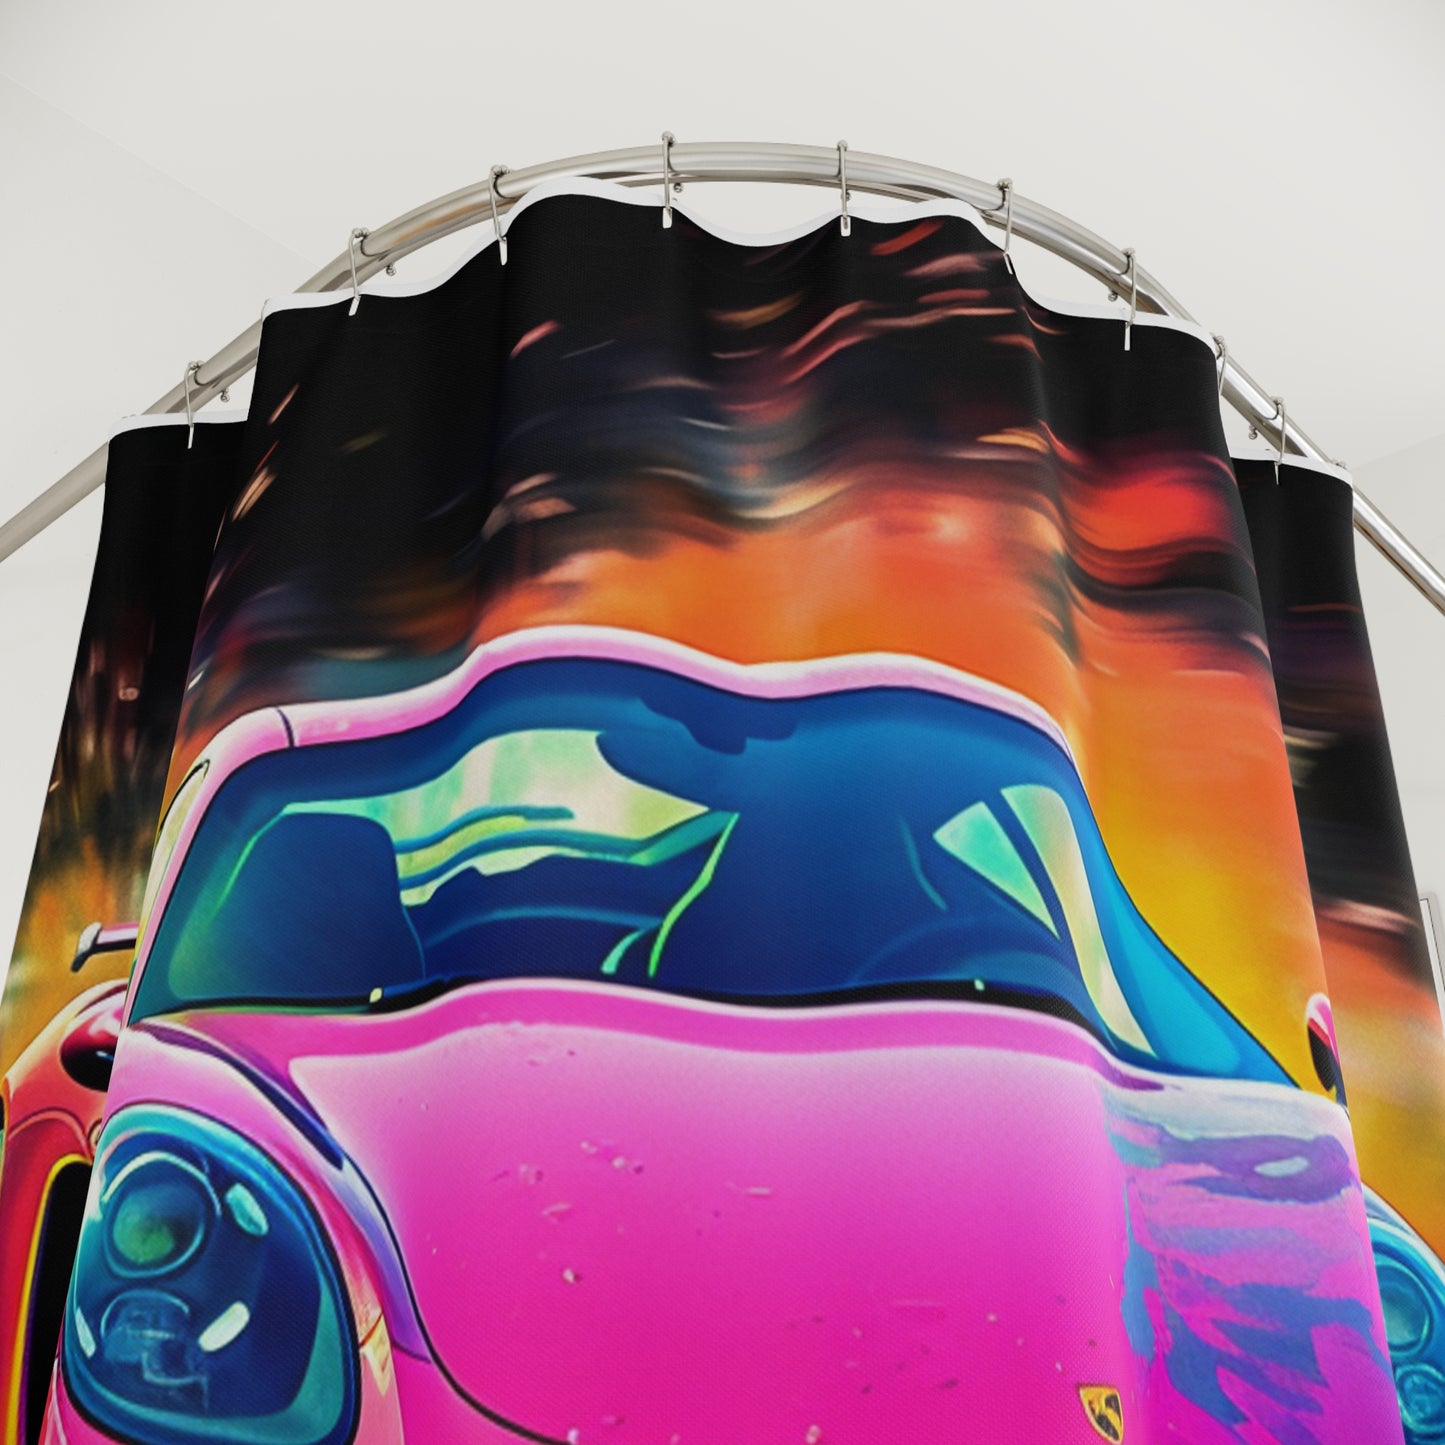 Polyester Shower Curtain Pink Porsche water fusion 4